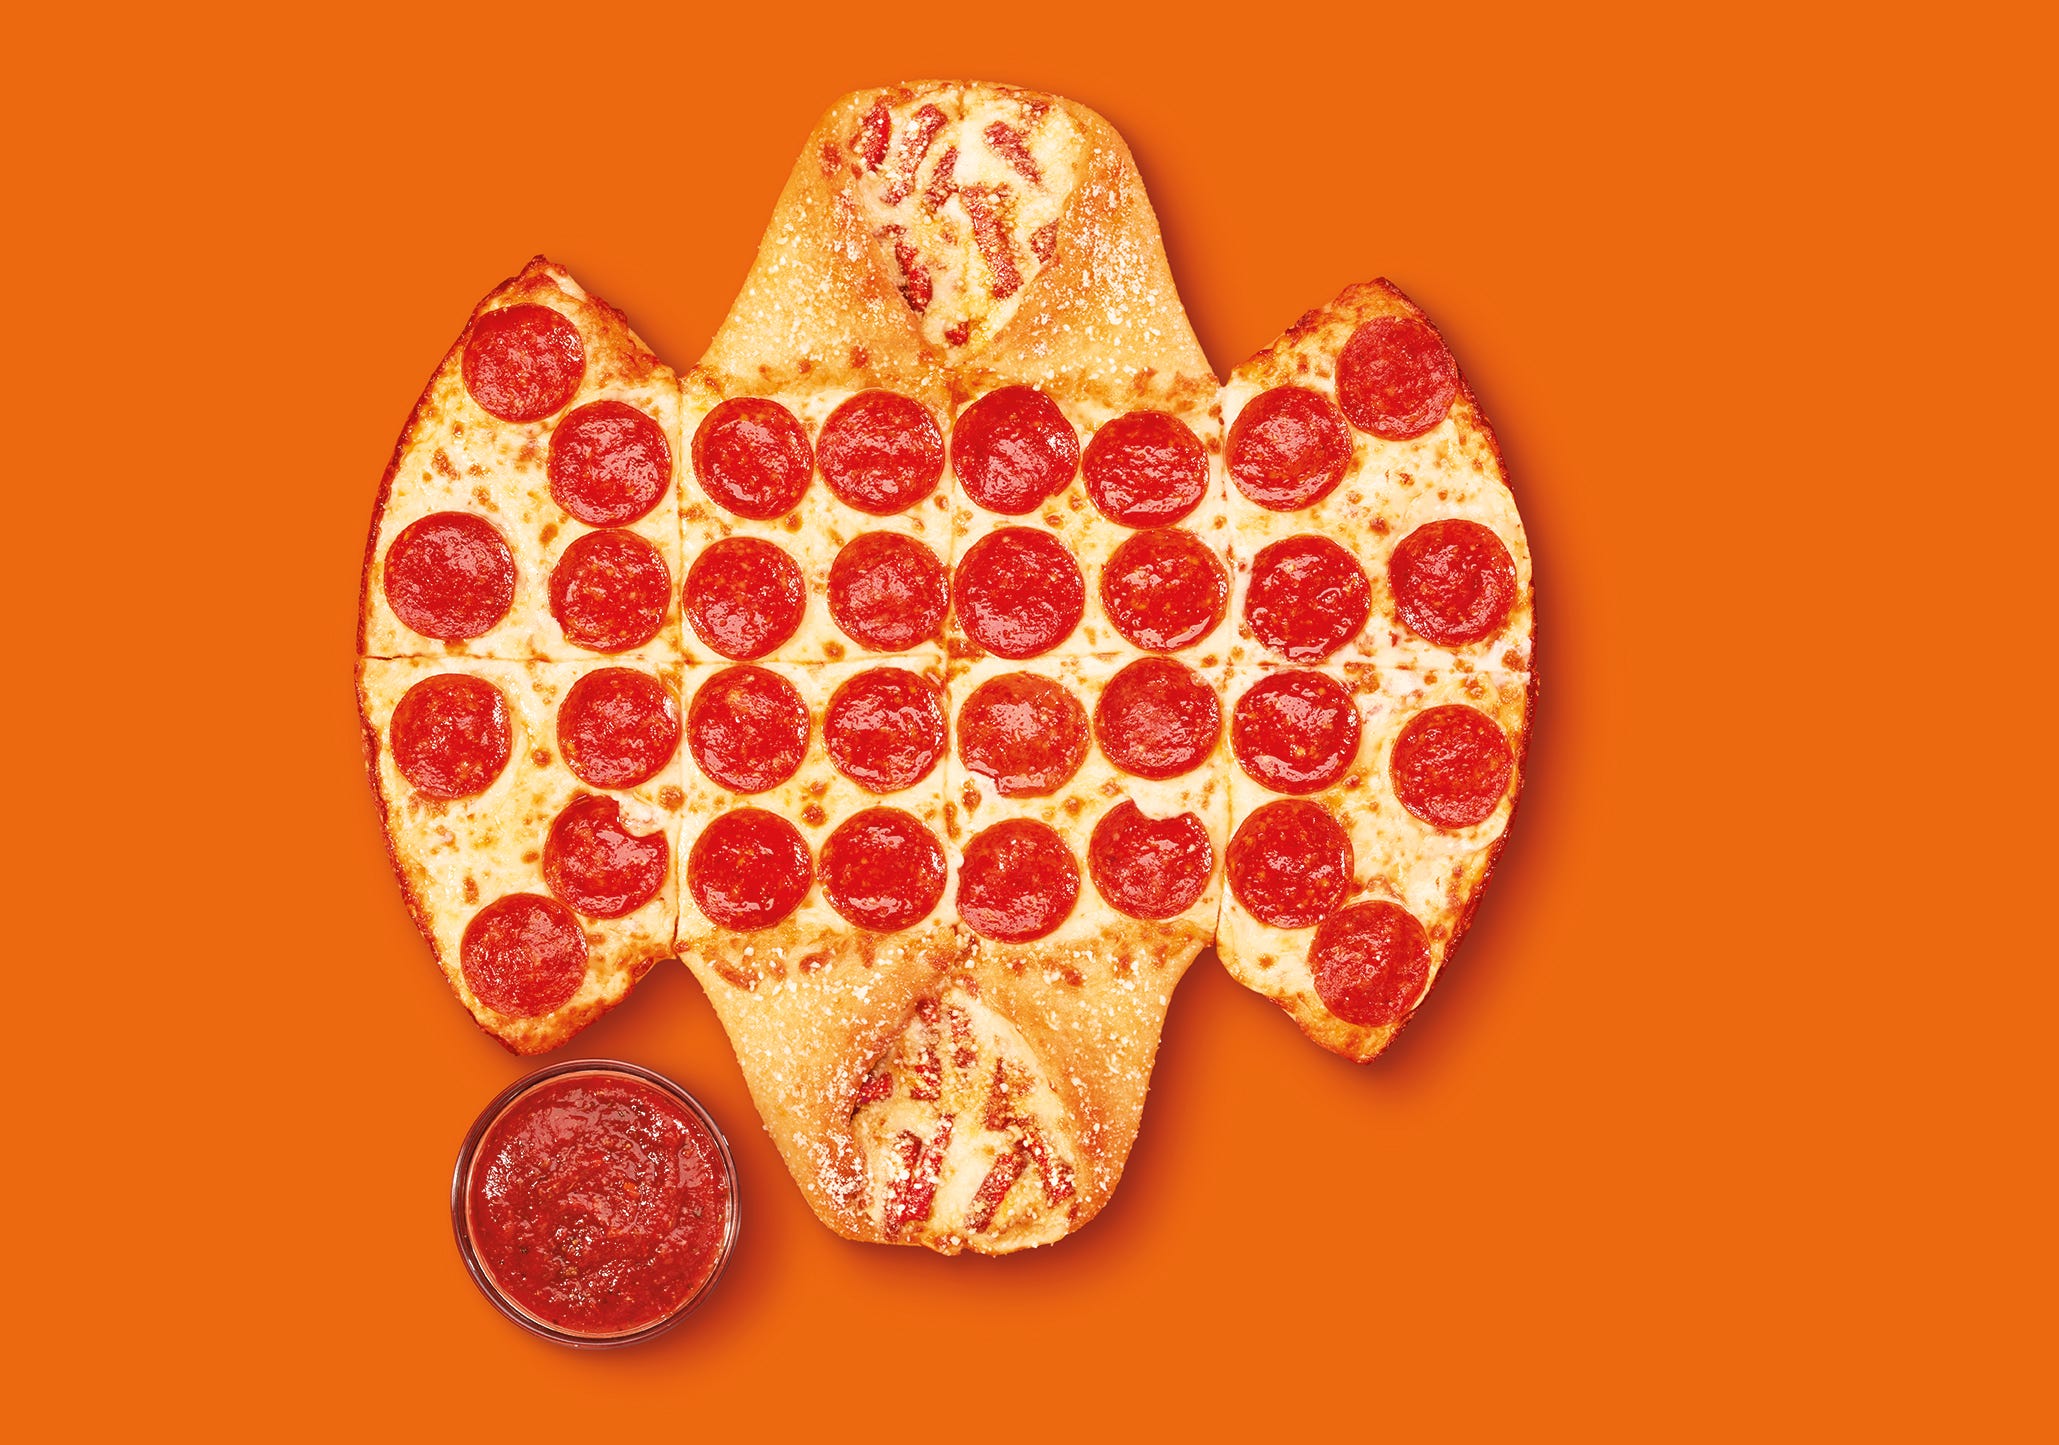 Little Caesars adds Batman-inspired pizza